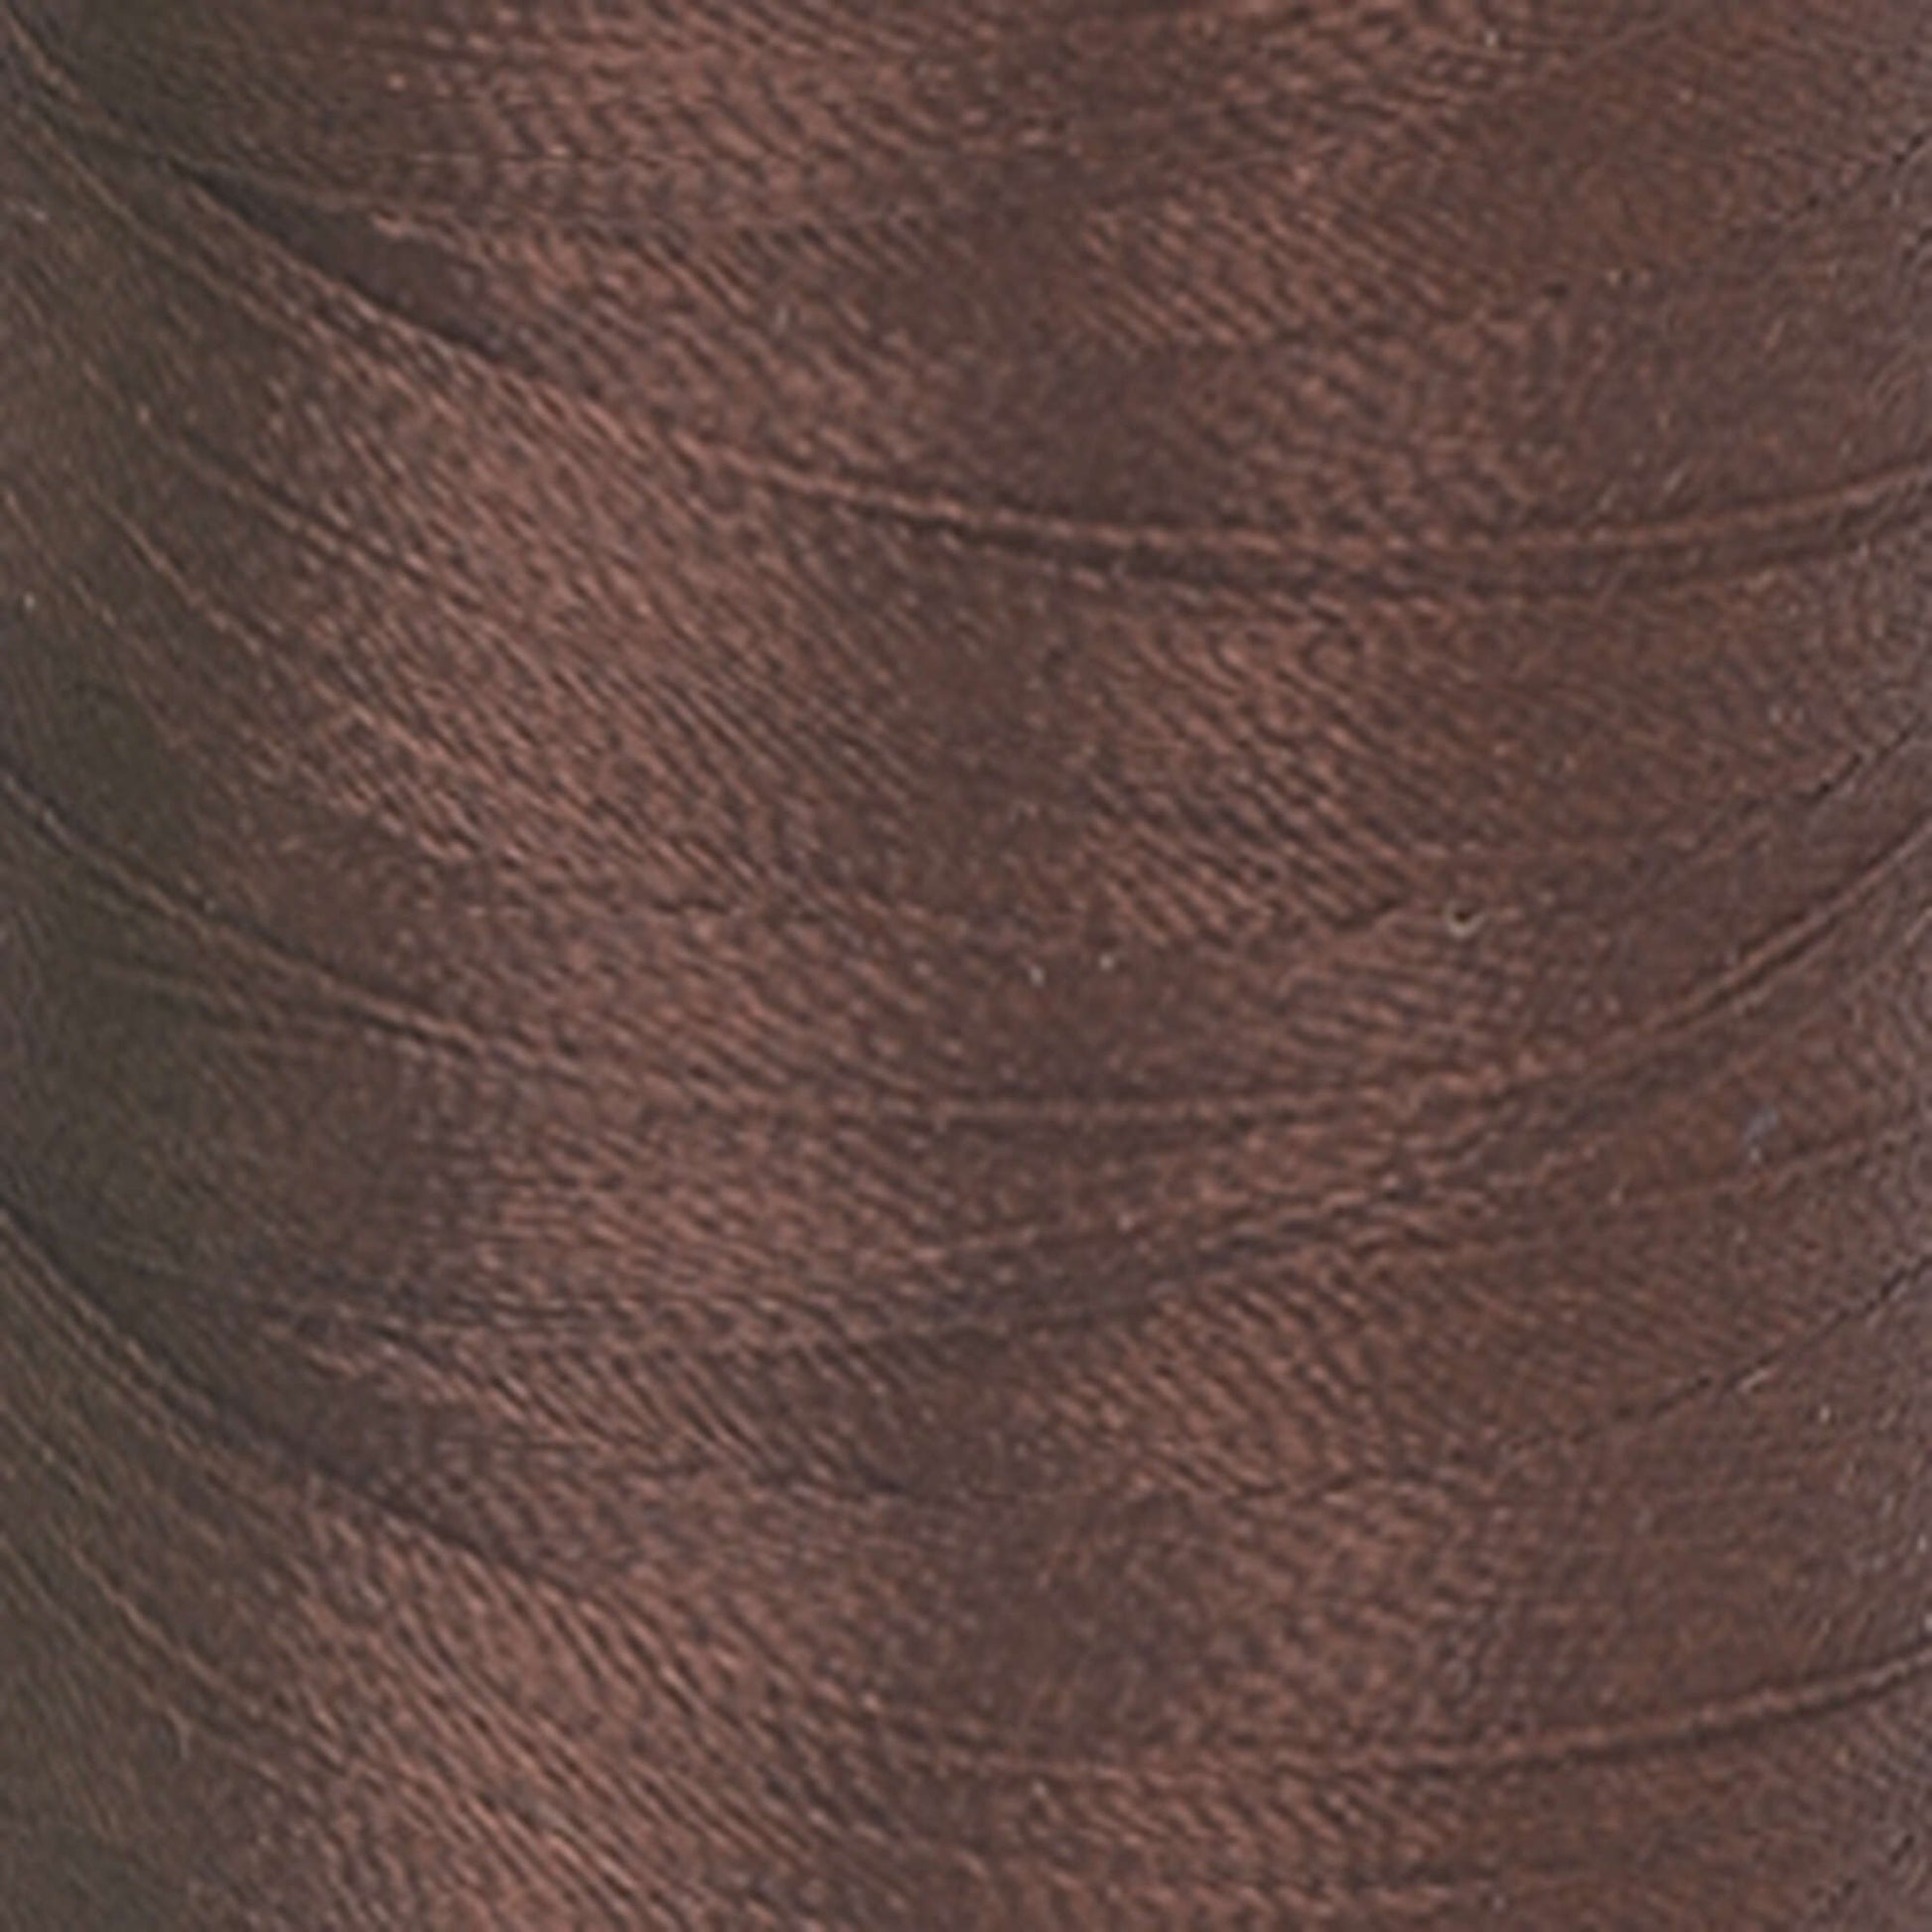 Coats & Clark Machine Embroidery Thread (1100 Yards) Chona Brown